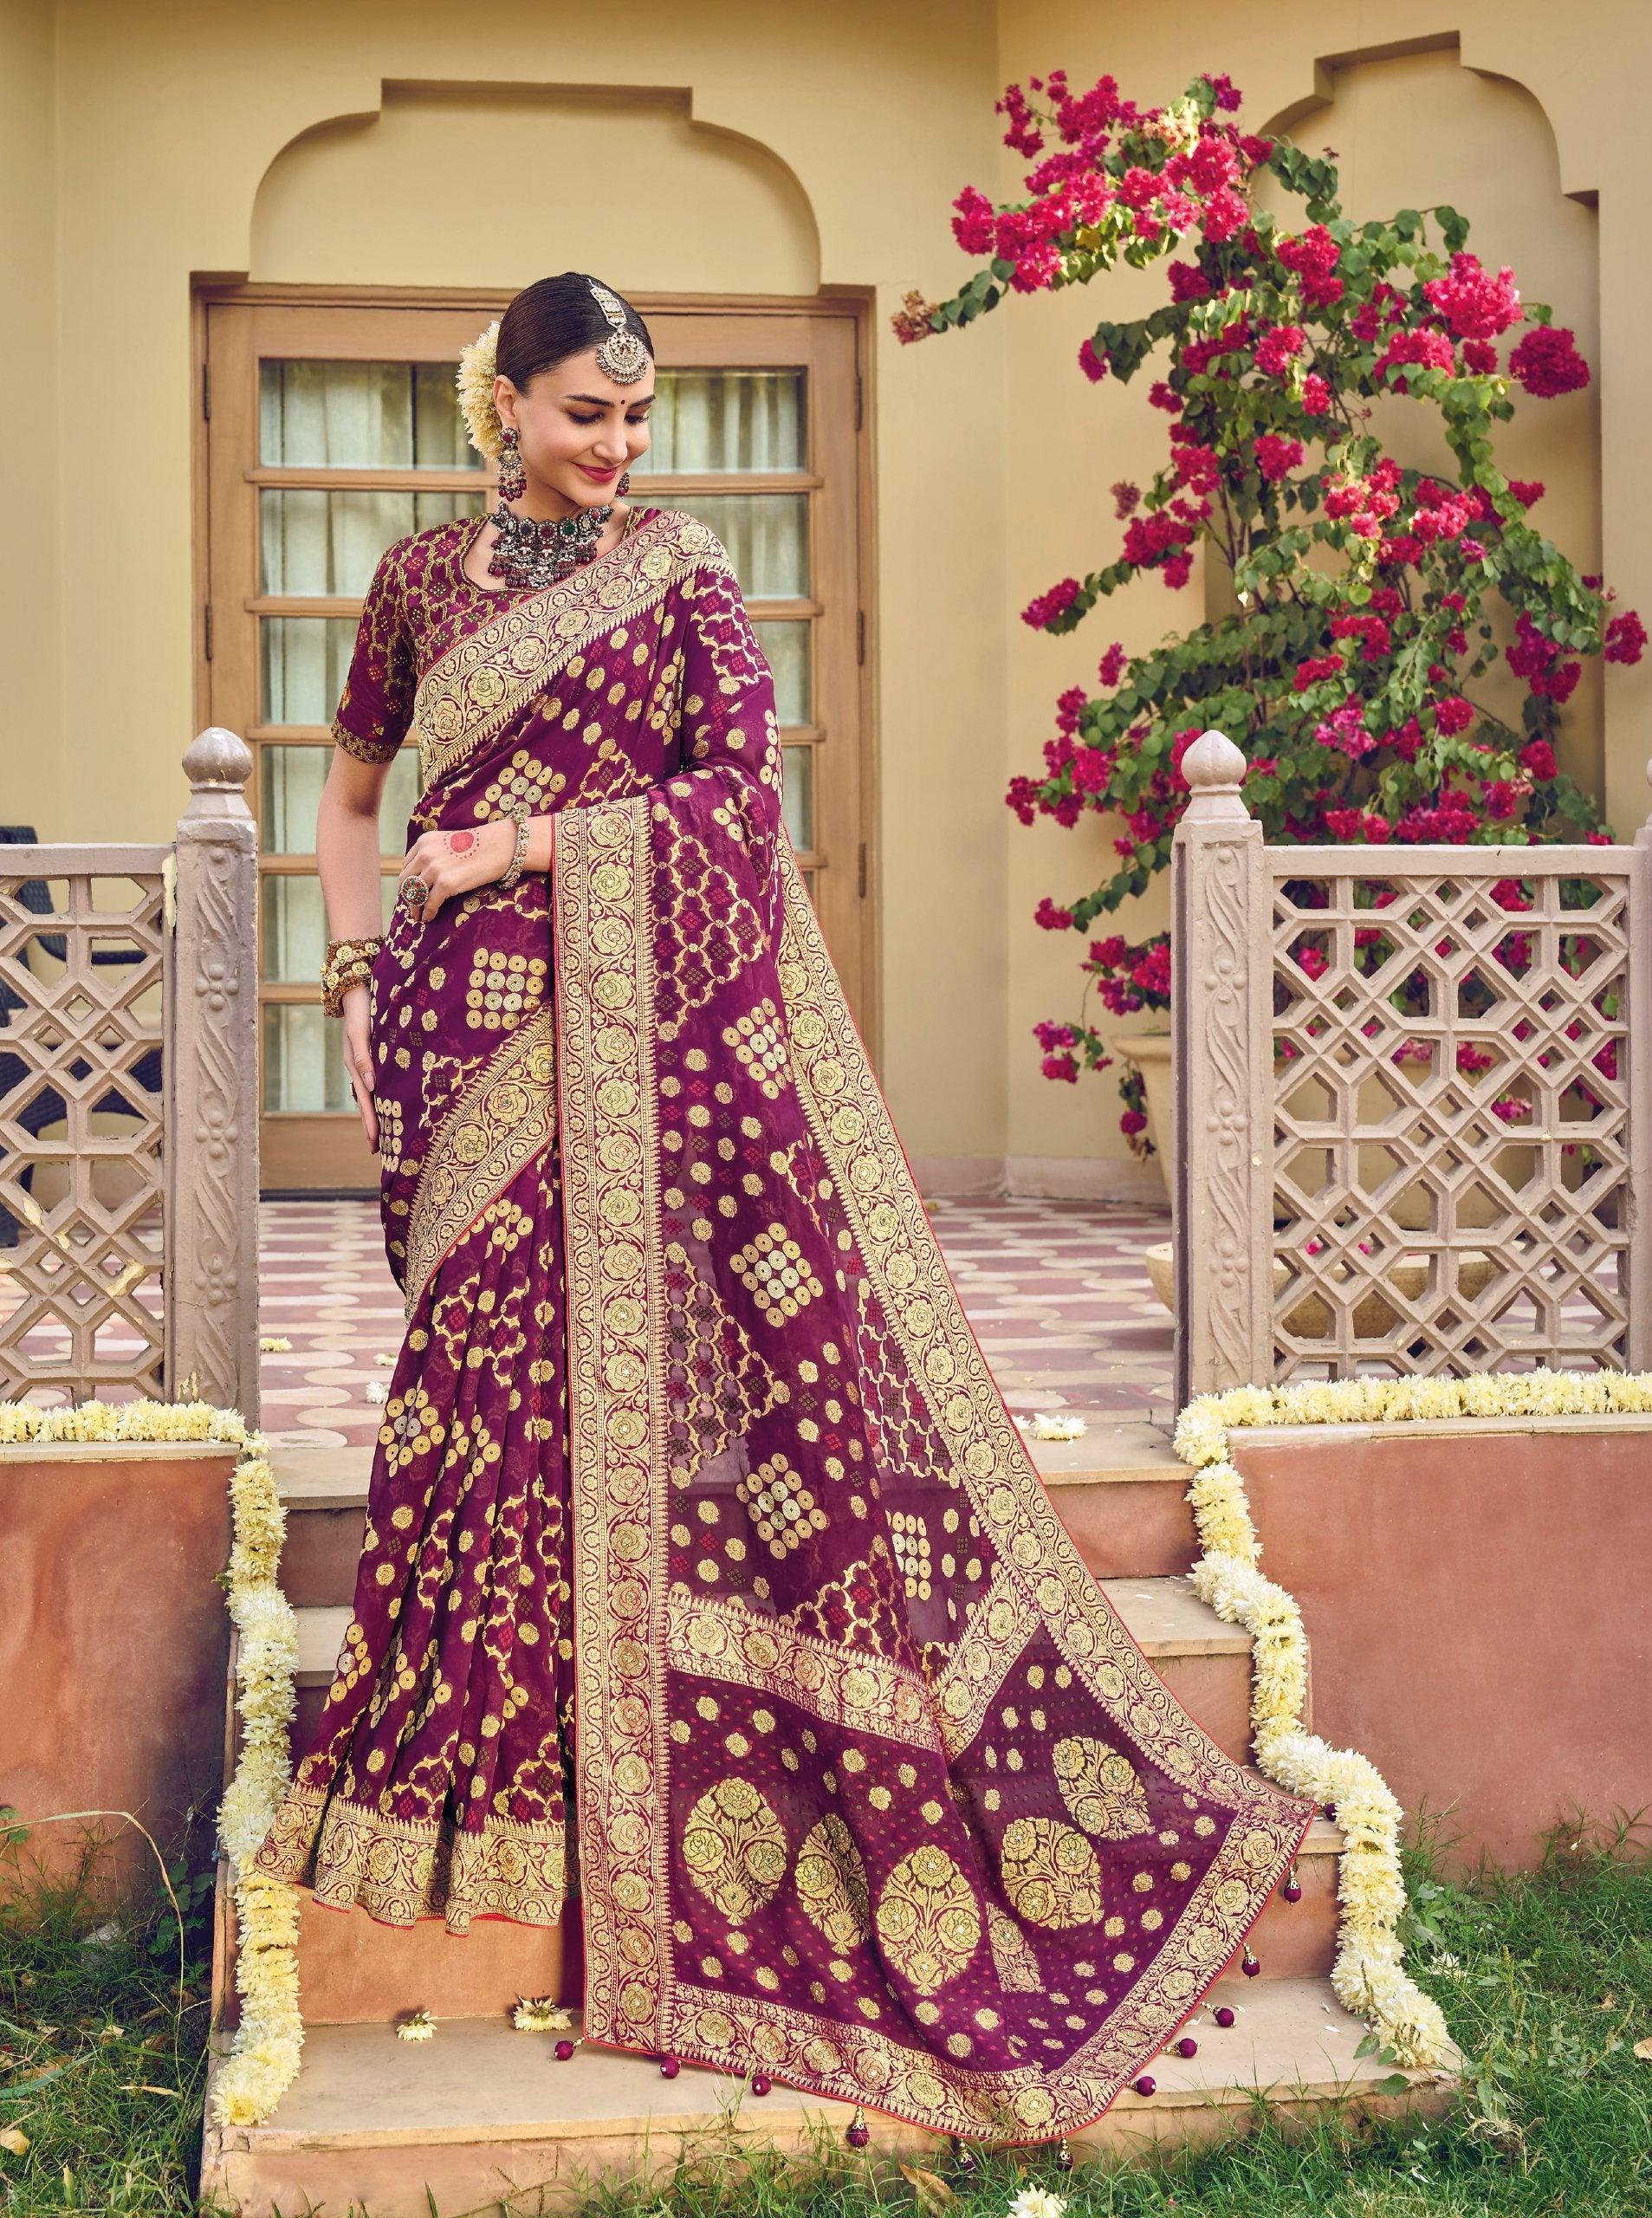 Shaadi chic – exotic jewel tones on an Indian bridal sari | Wedding  Inspirasi